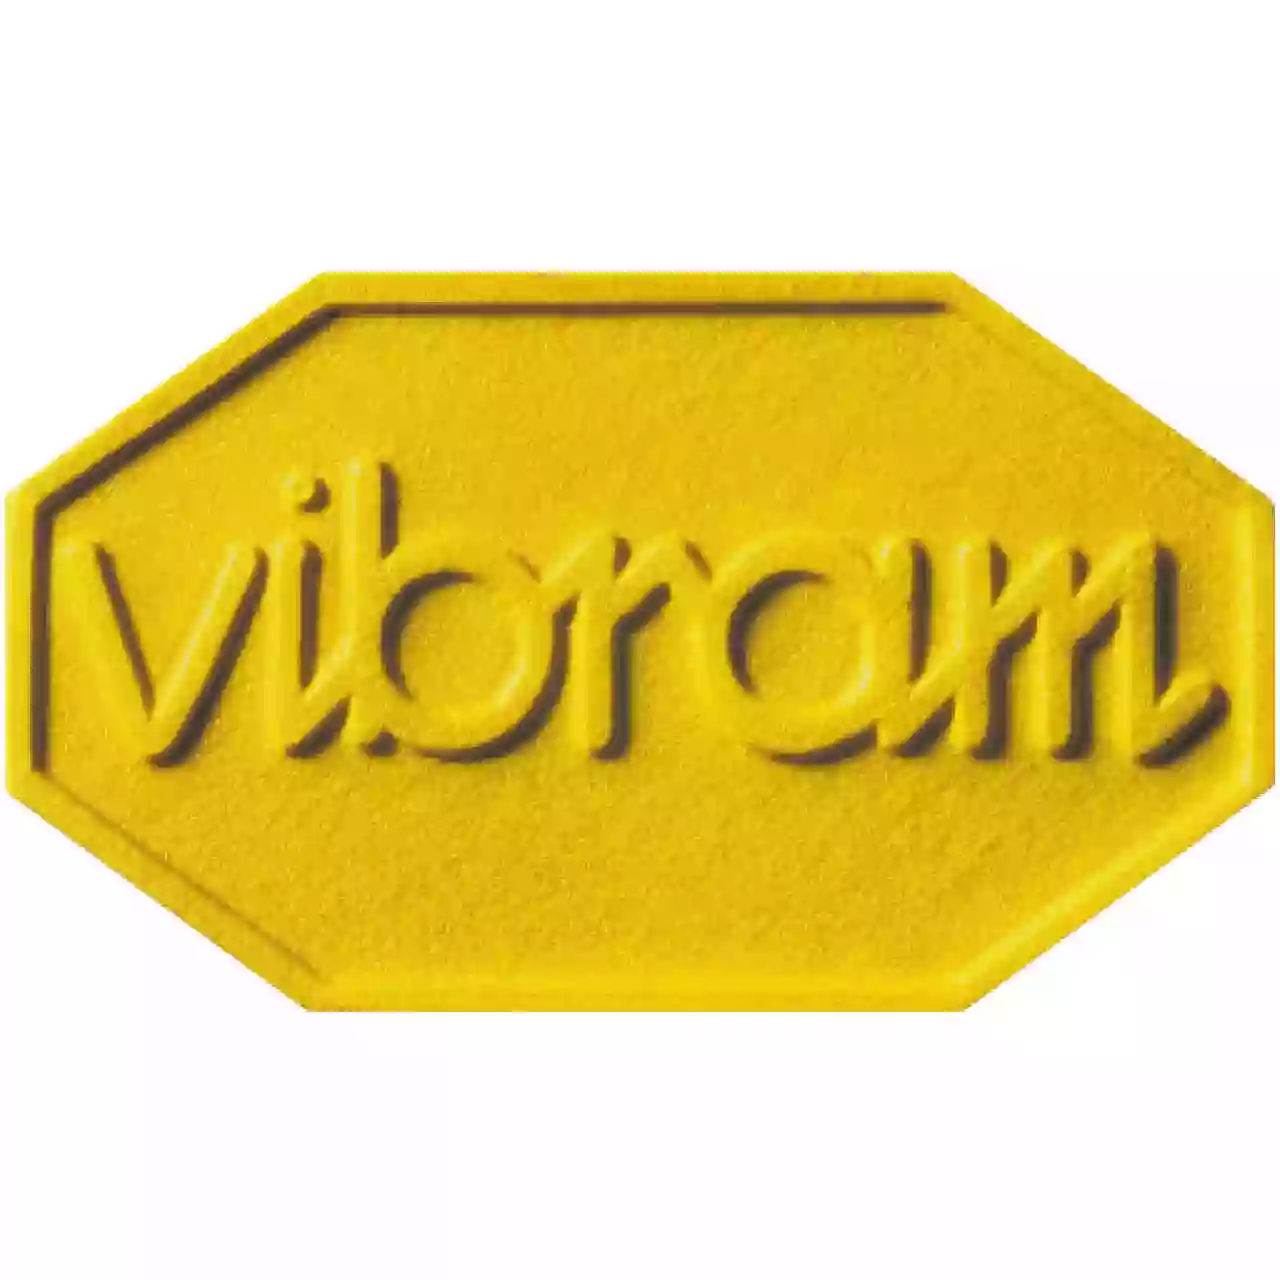 Vibram Corporation